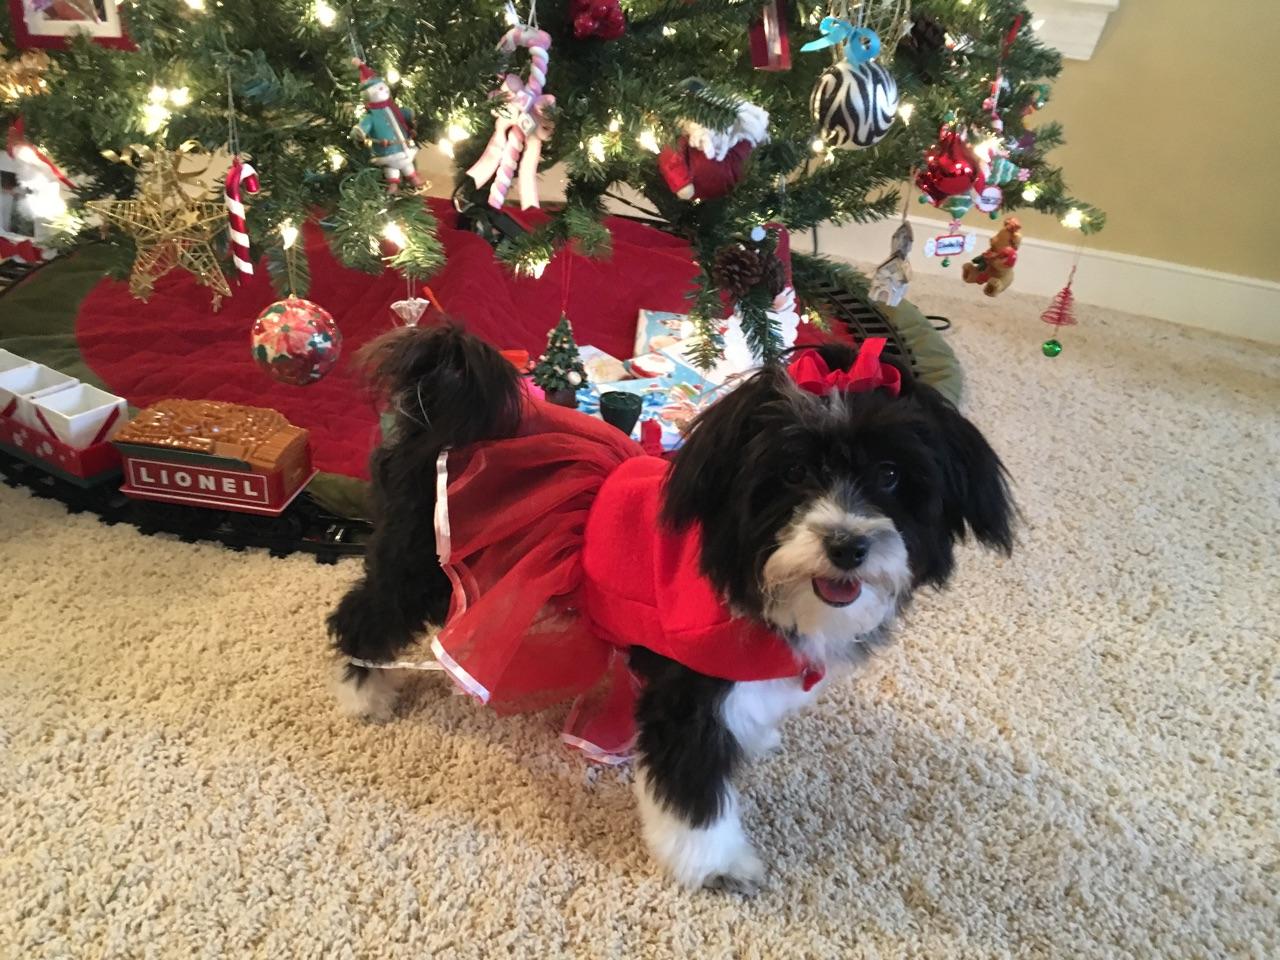 Chloe wishing everyone a nice Christmas.